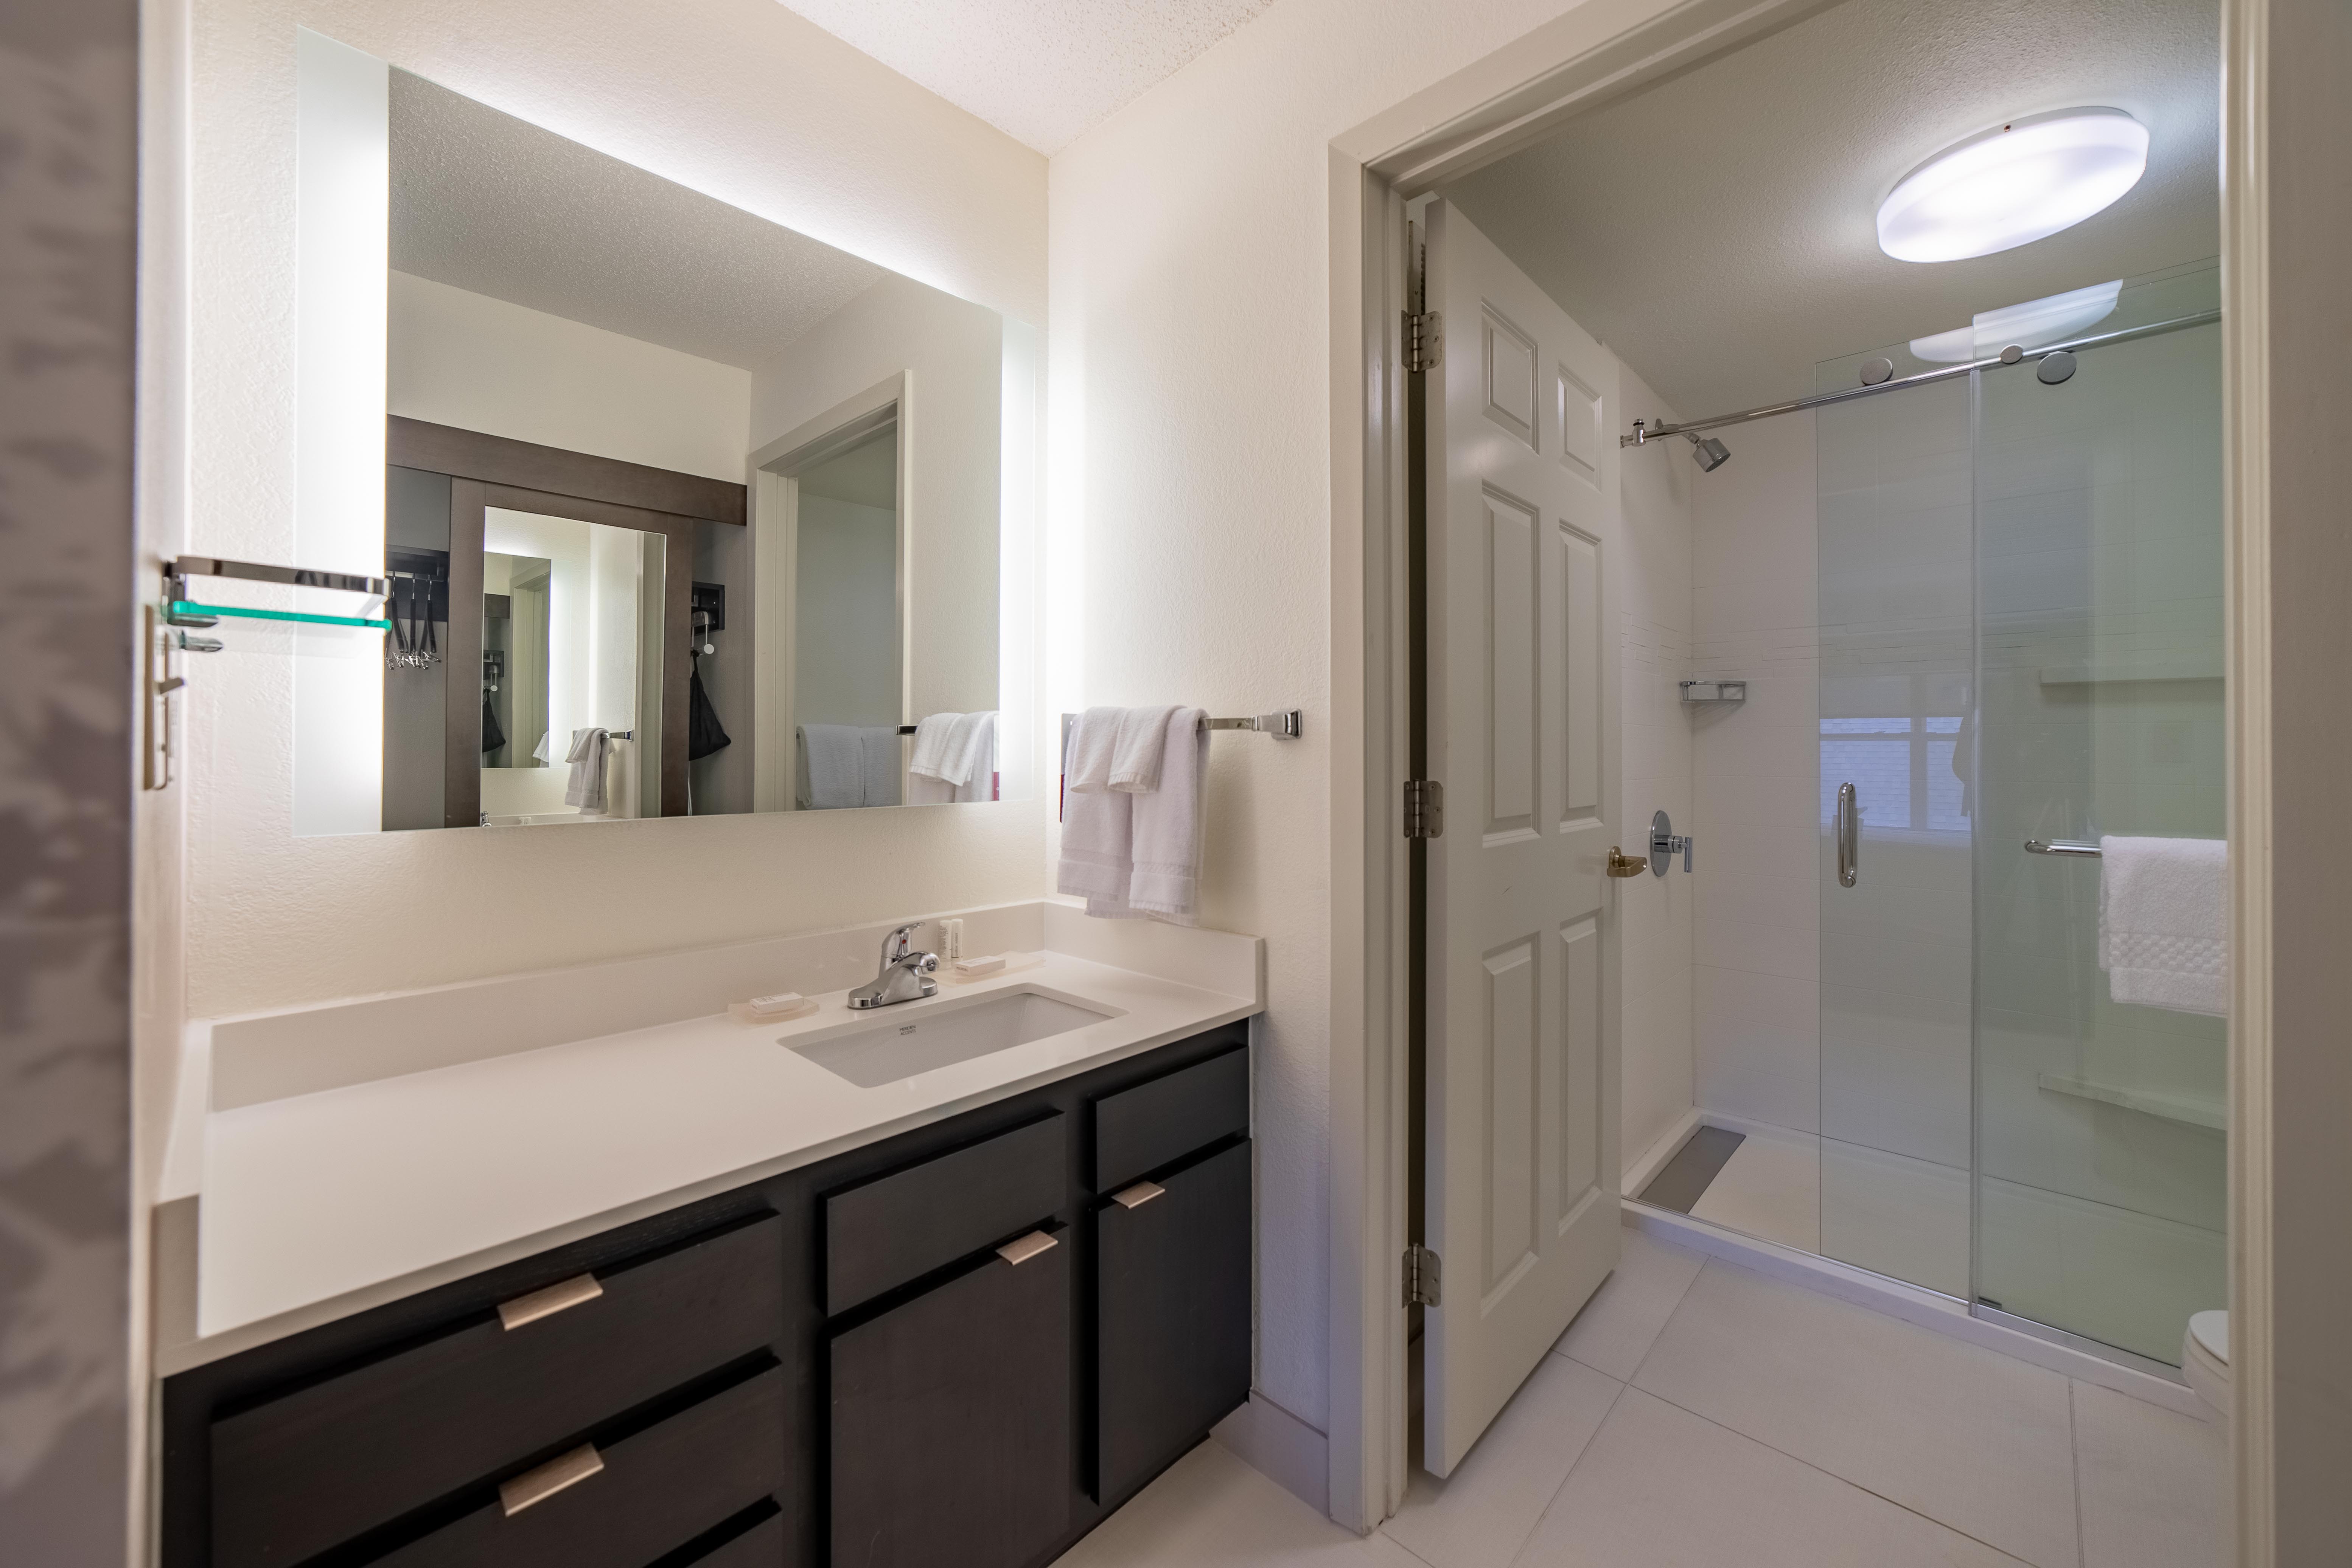 Residence Inn Bathroom Vanity